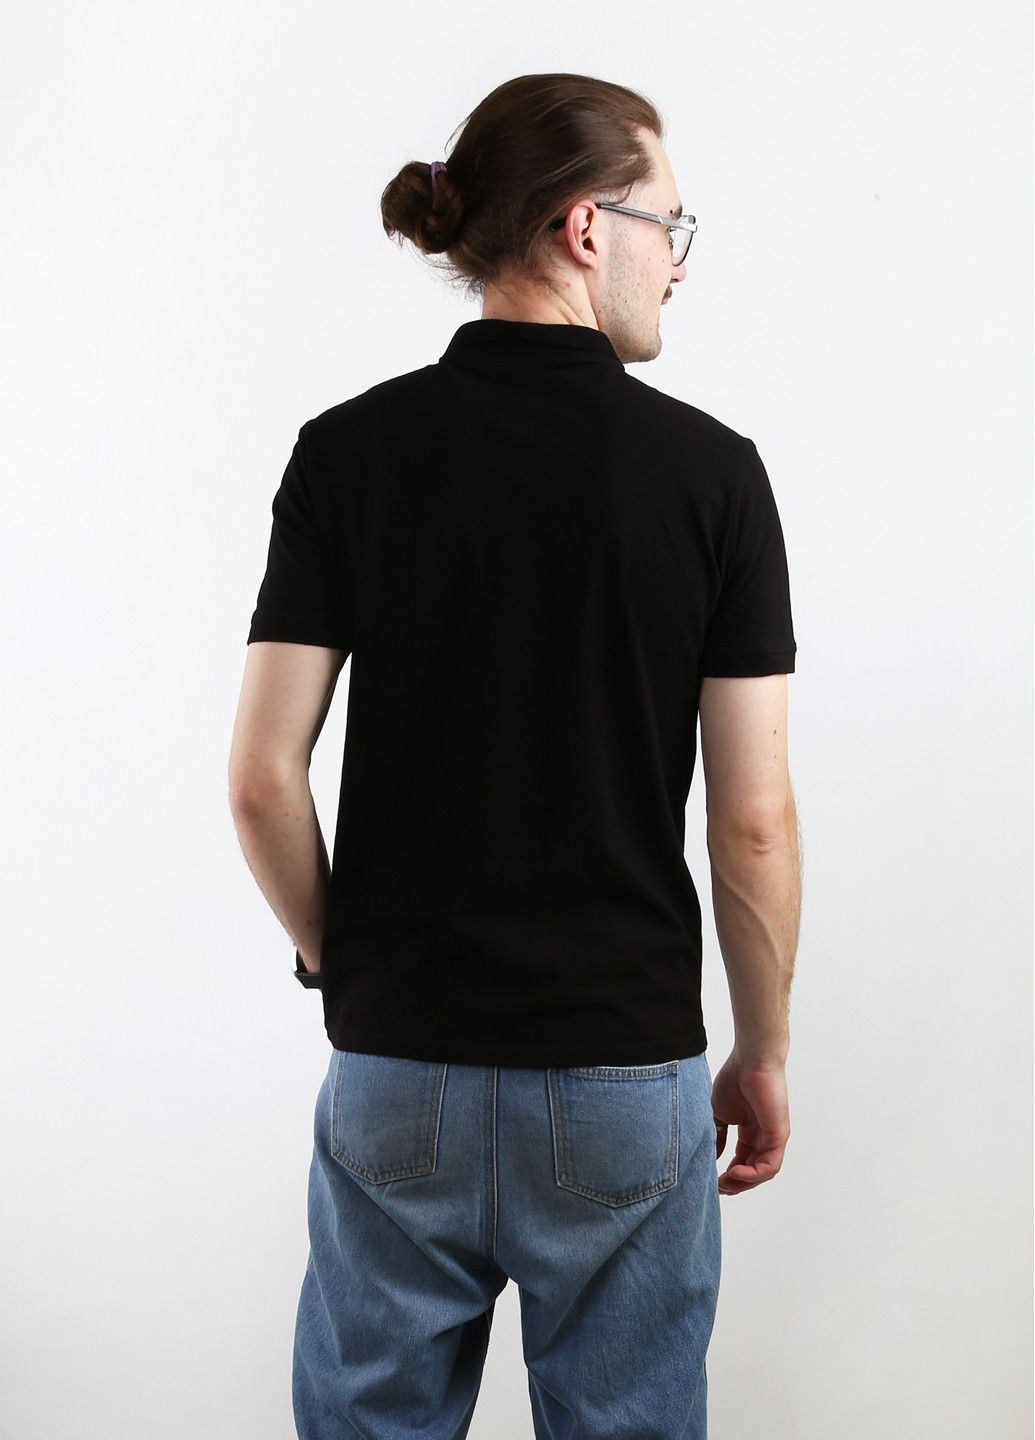 Черная футболка-поло для мужчин Mtp с рисунком